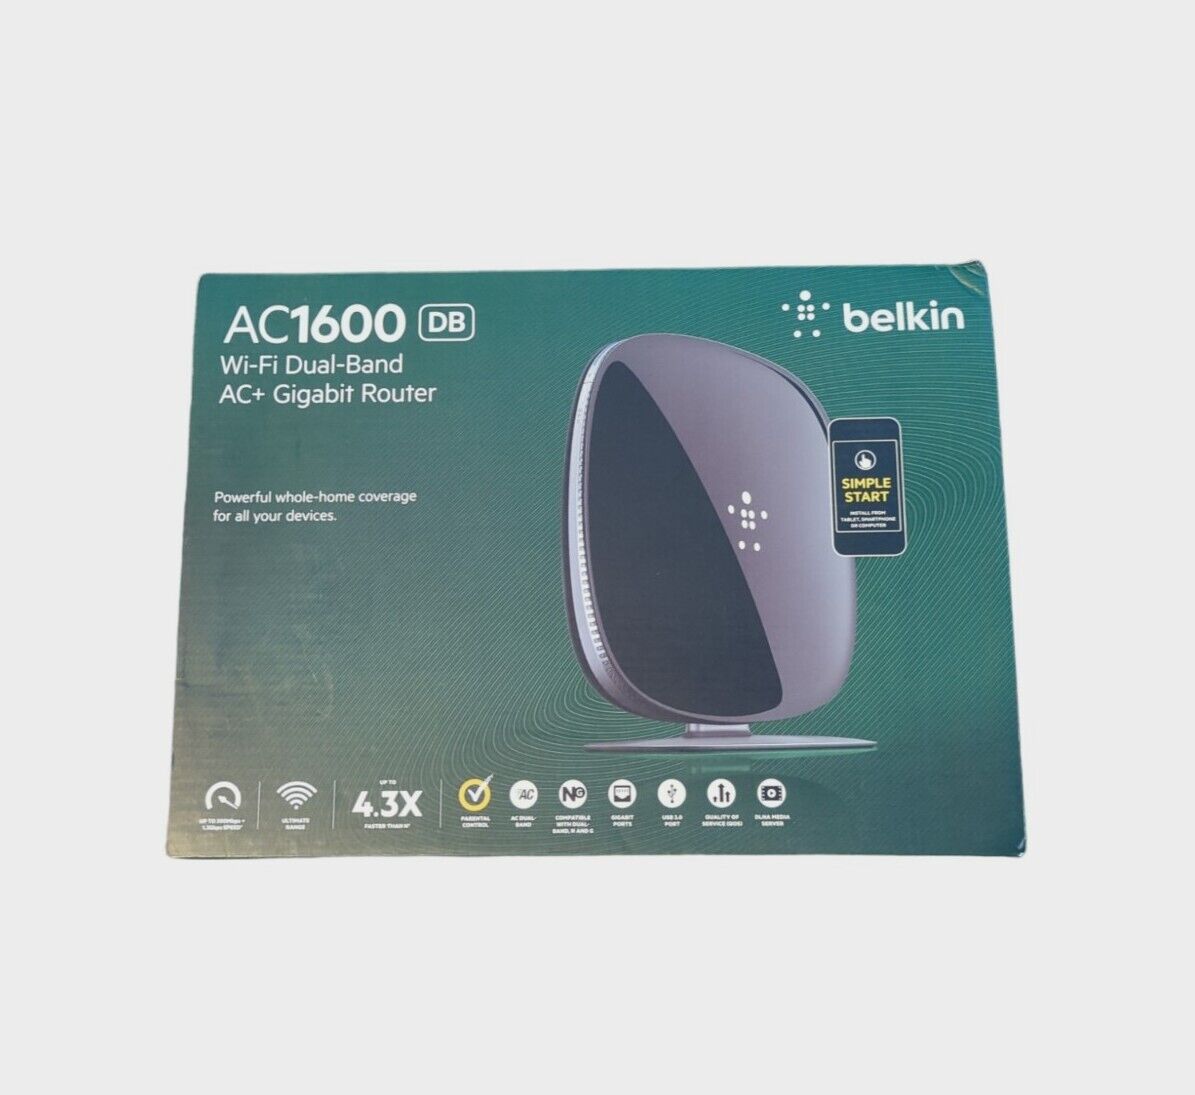 Belkin AC1600 DB WiFi Dual Band AC+ Gigabit Router Simple Start Has Code Card